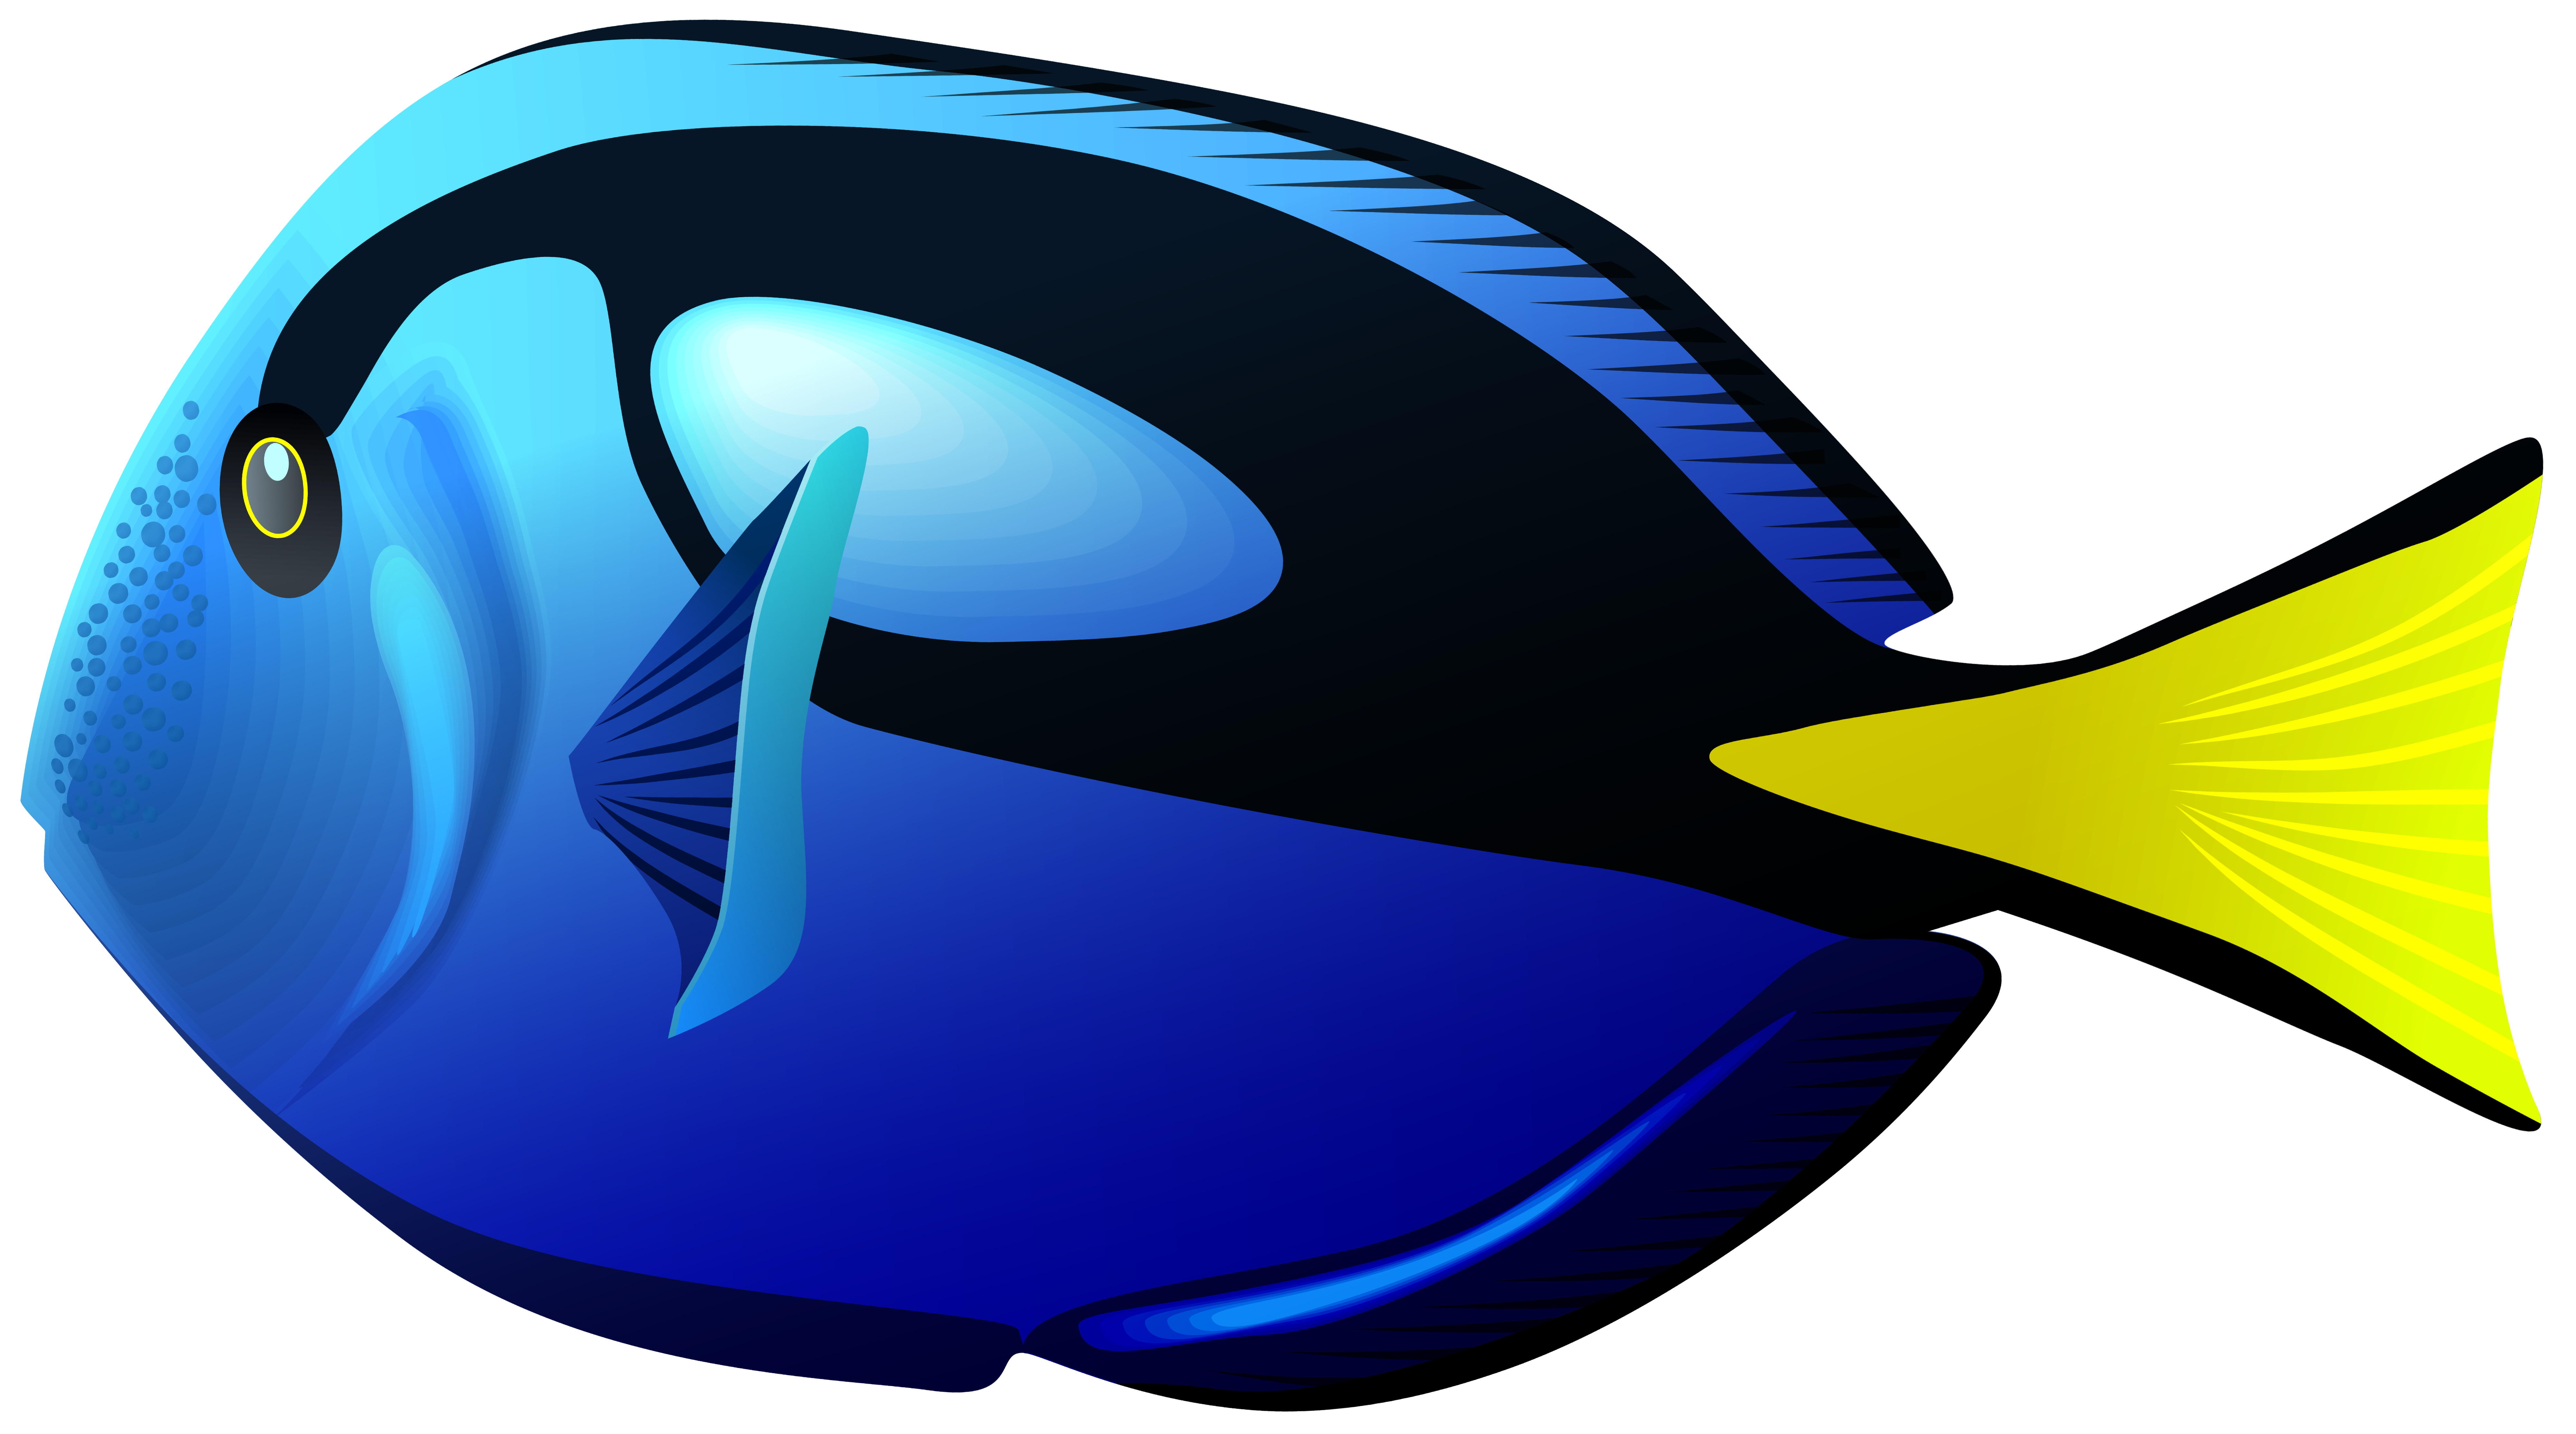 Fish Basket transparent background PNG cliparts free download